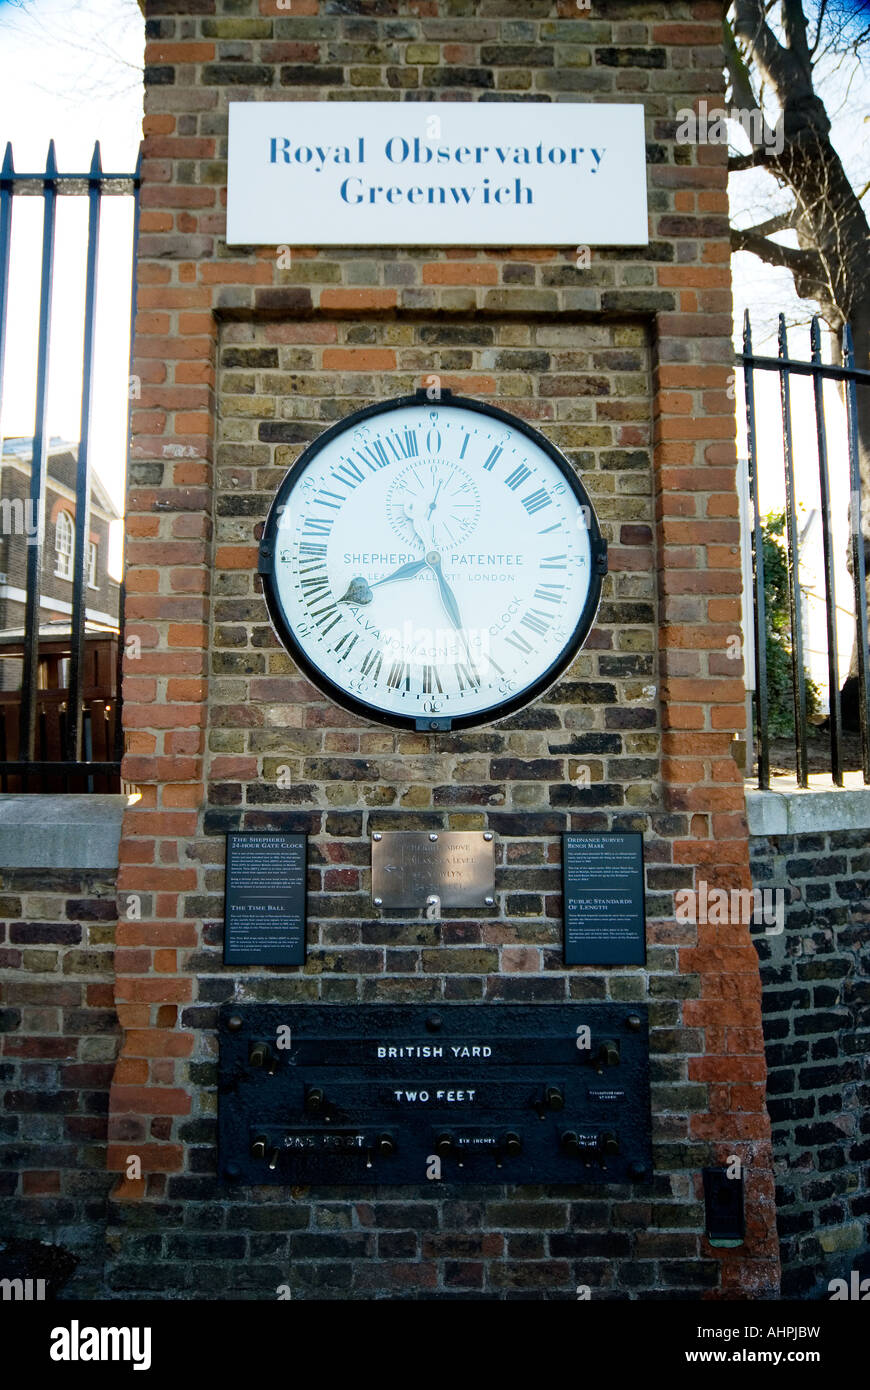 Greenwich Mean time clock, Londra Foto stock - Alamy